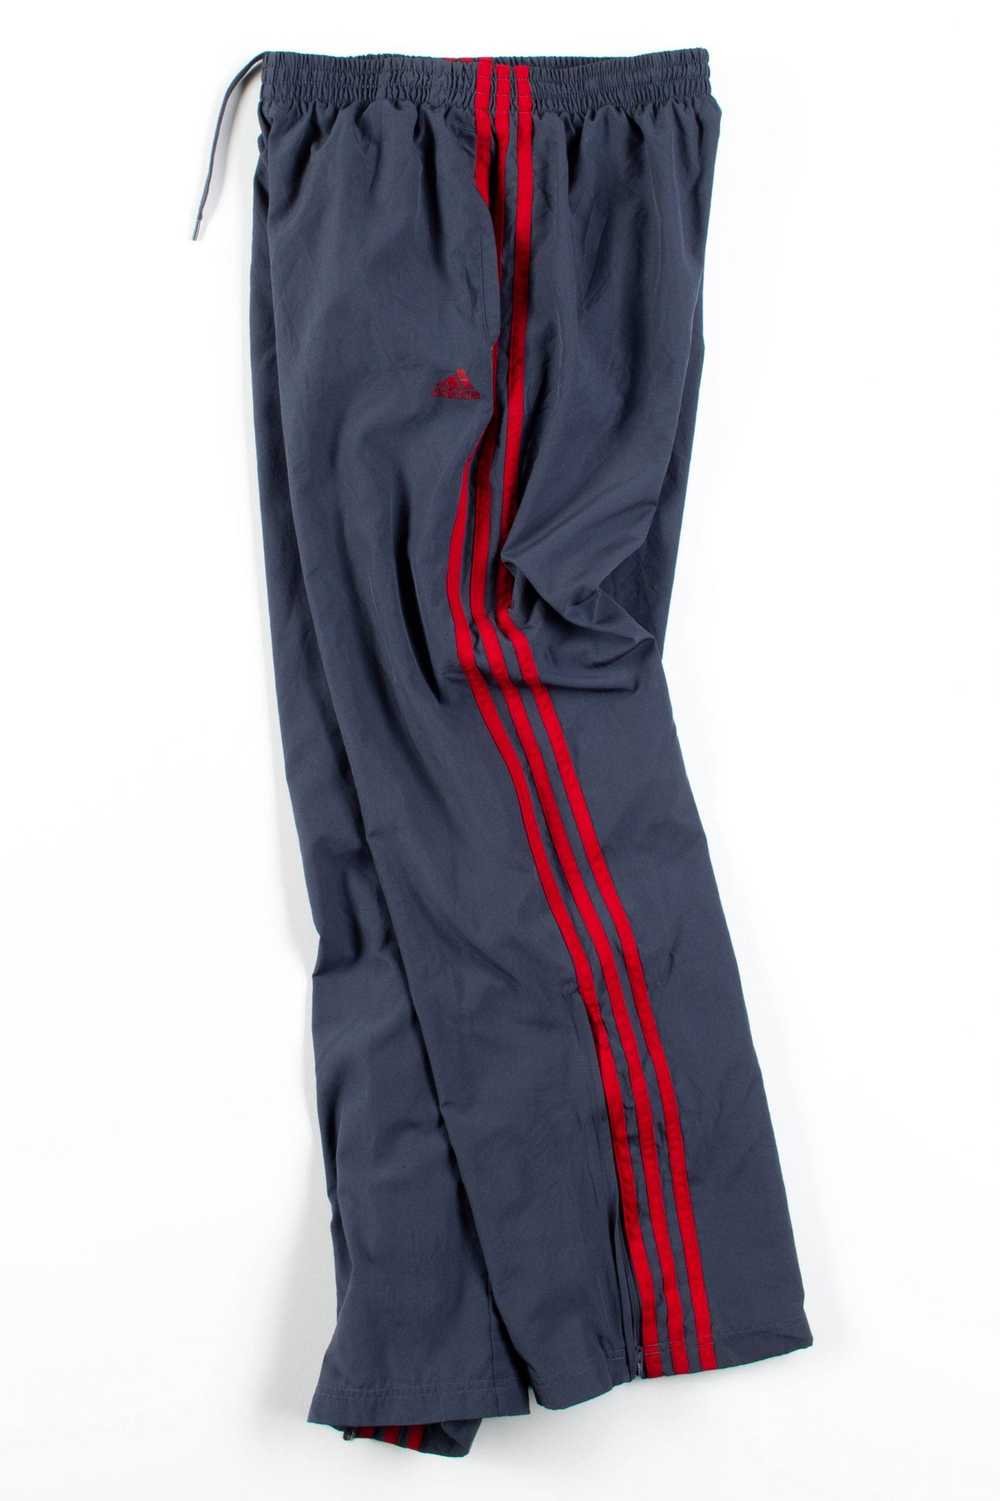 Grey & Red Adias Track Pants (sz. Youth XL) - image 2